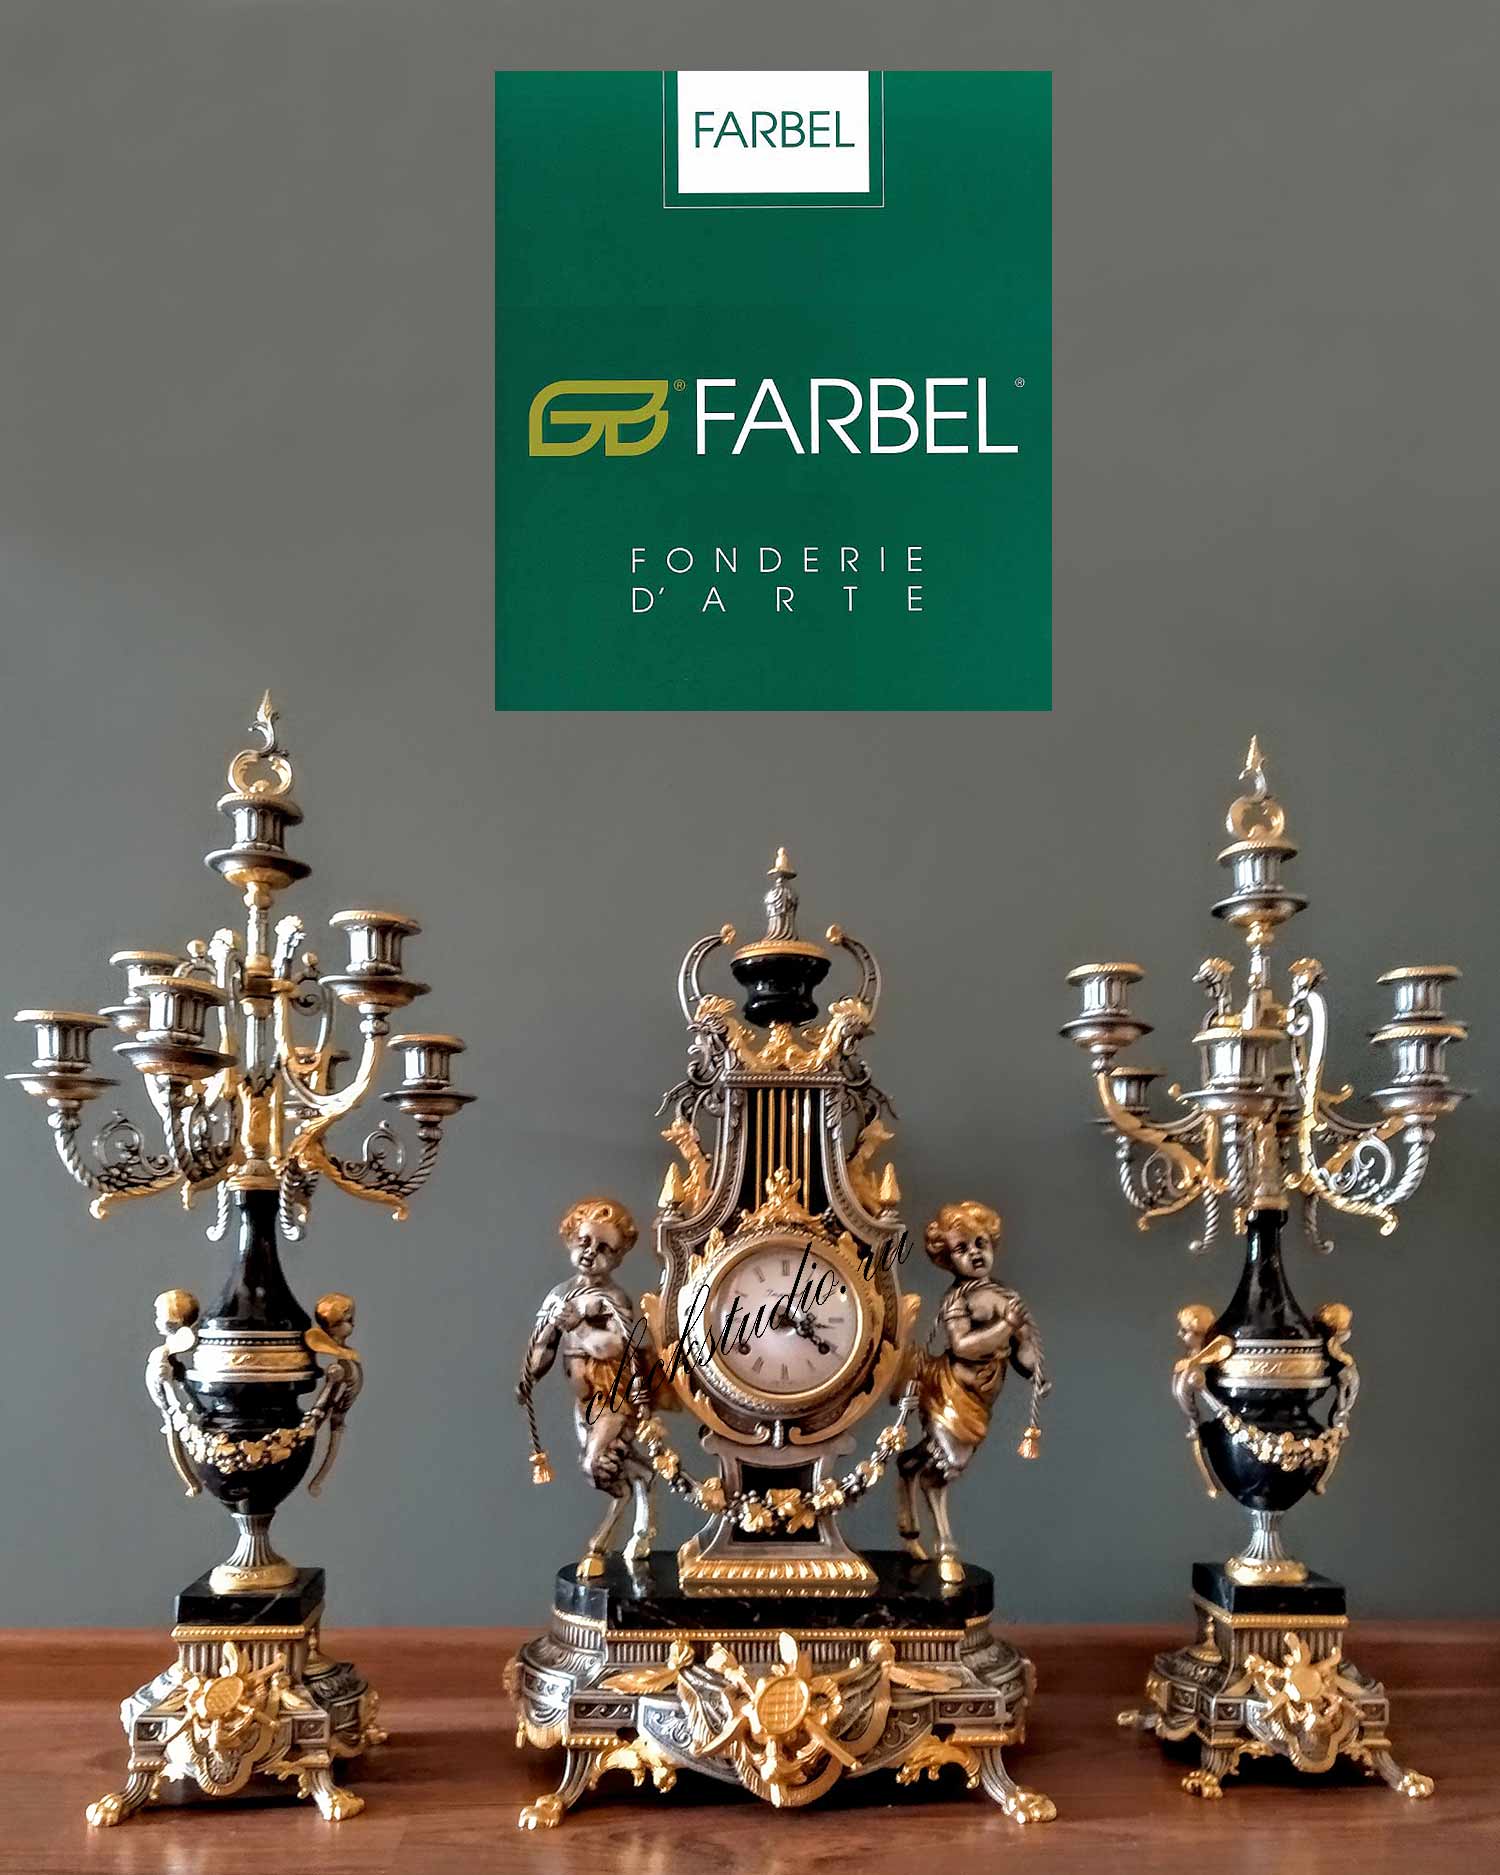 FARBEL Italy часы OB9Aa канделябры C62Aa*2 шт.